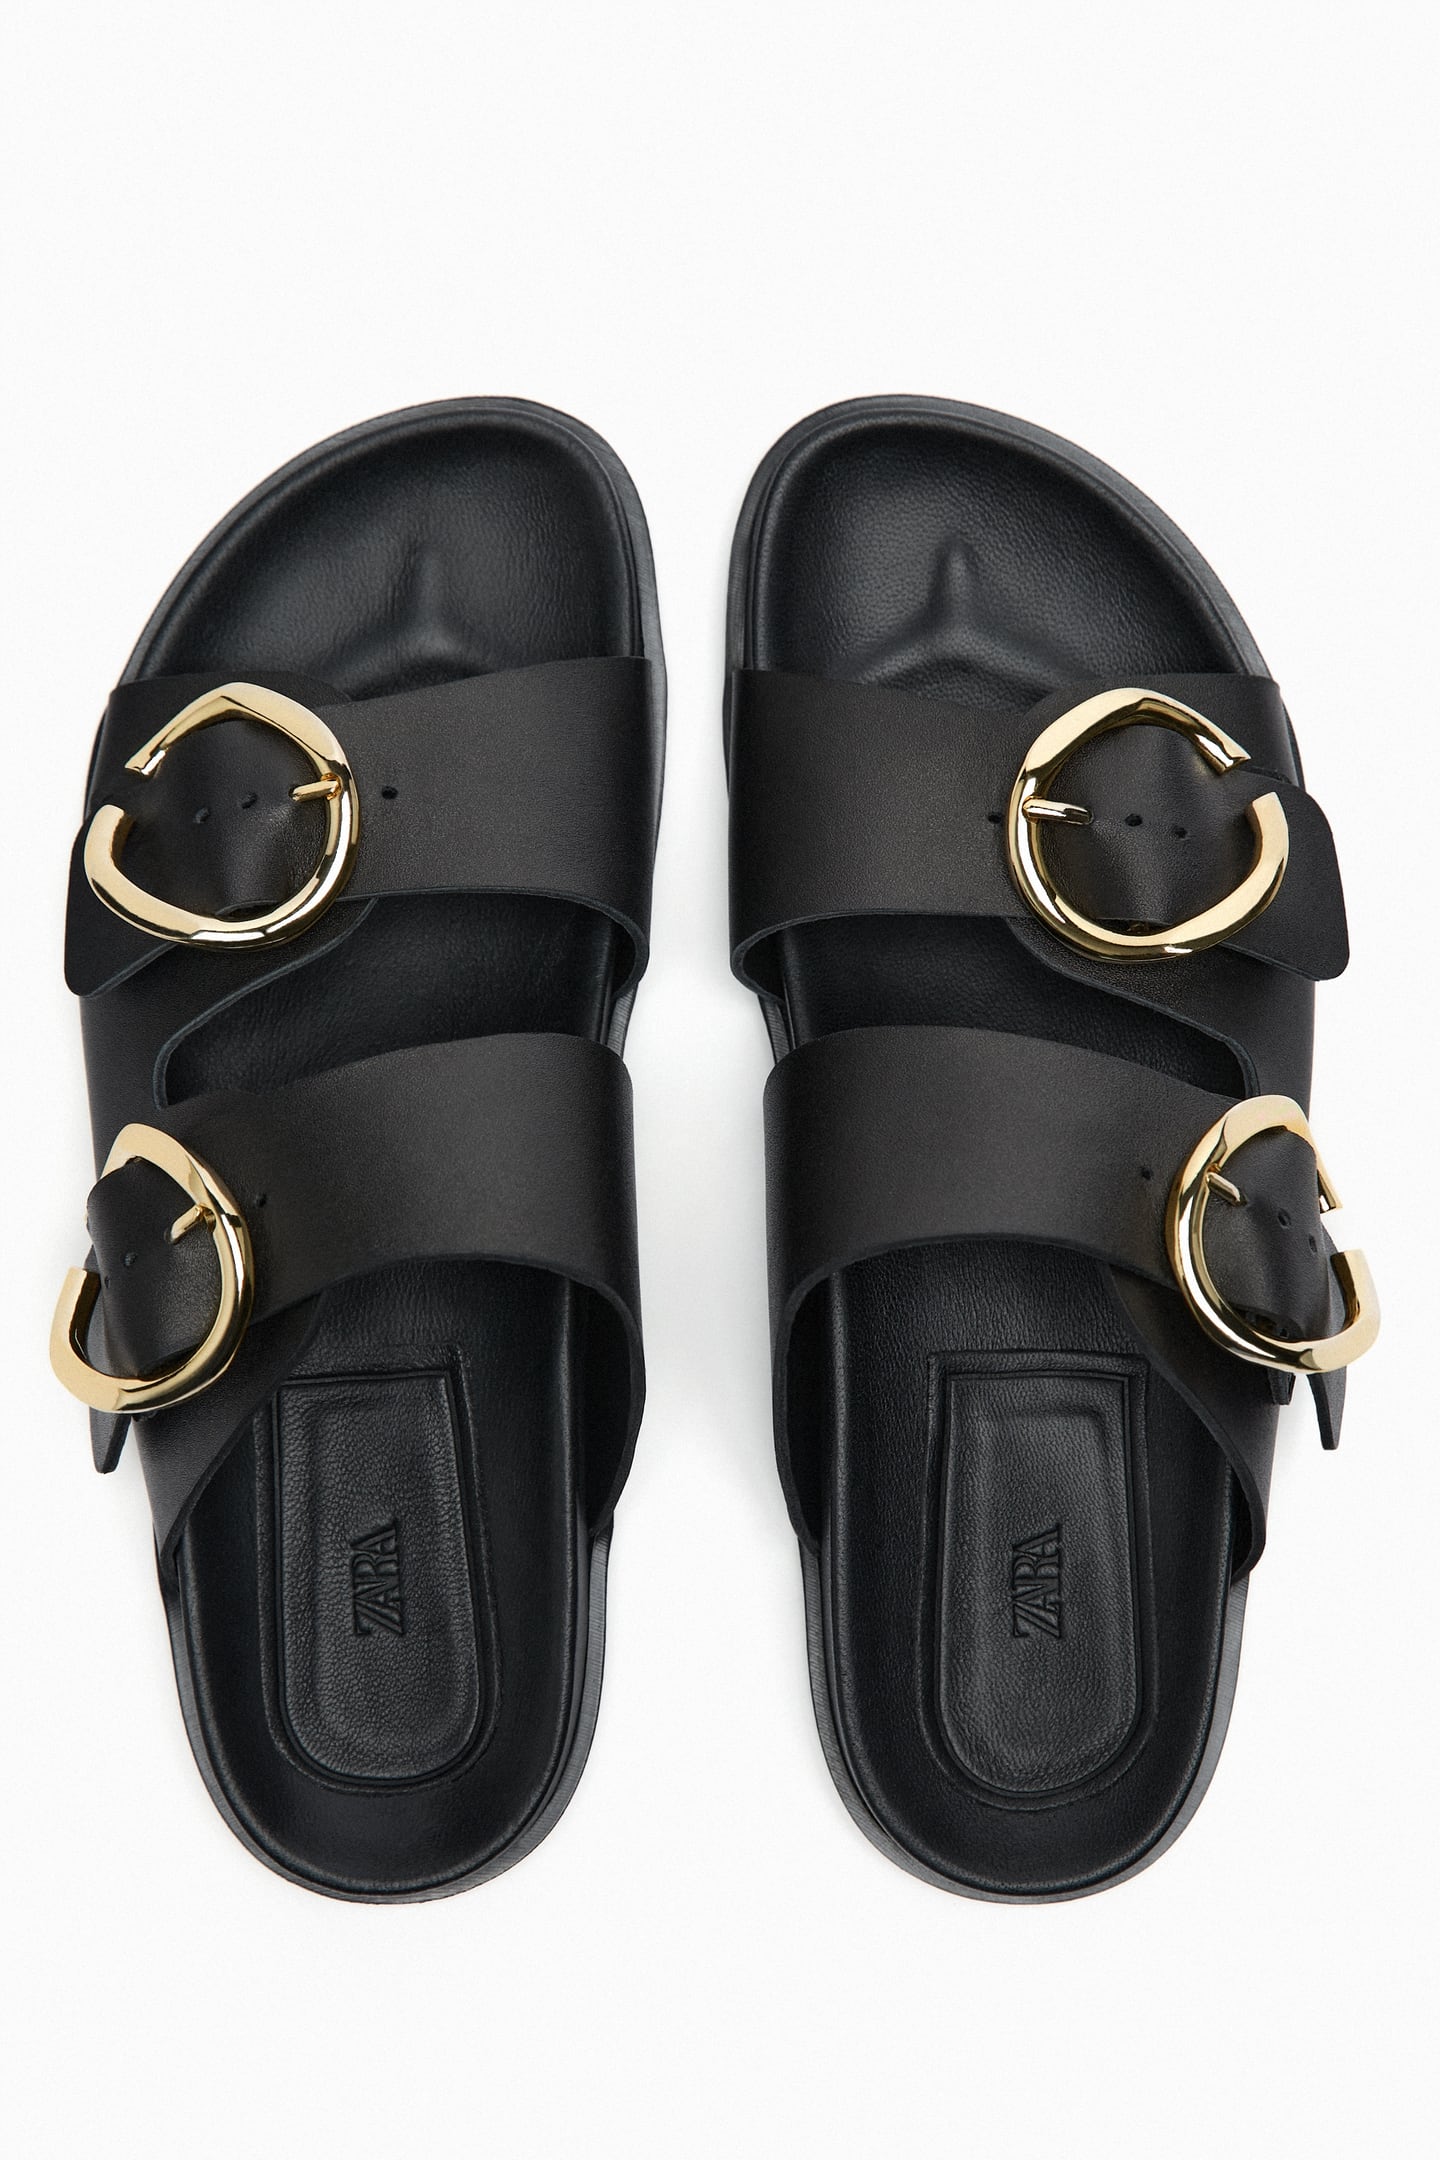 Flat buckled leather slider sandals, Zara